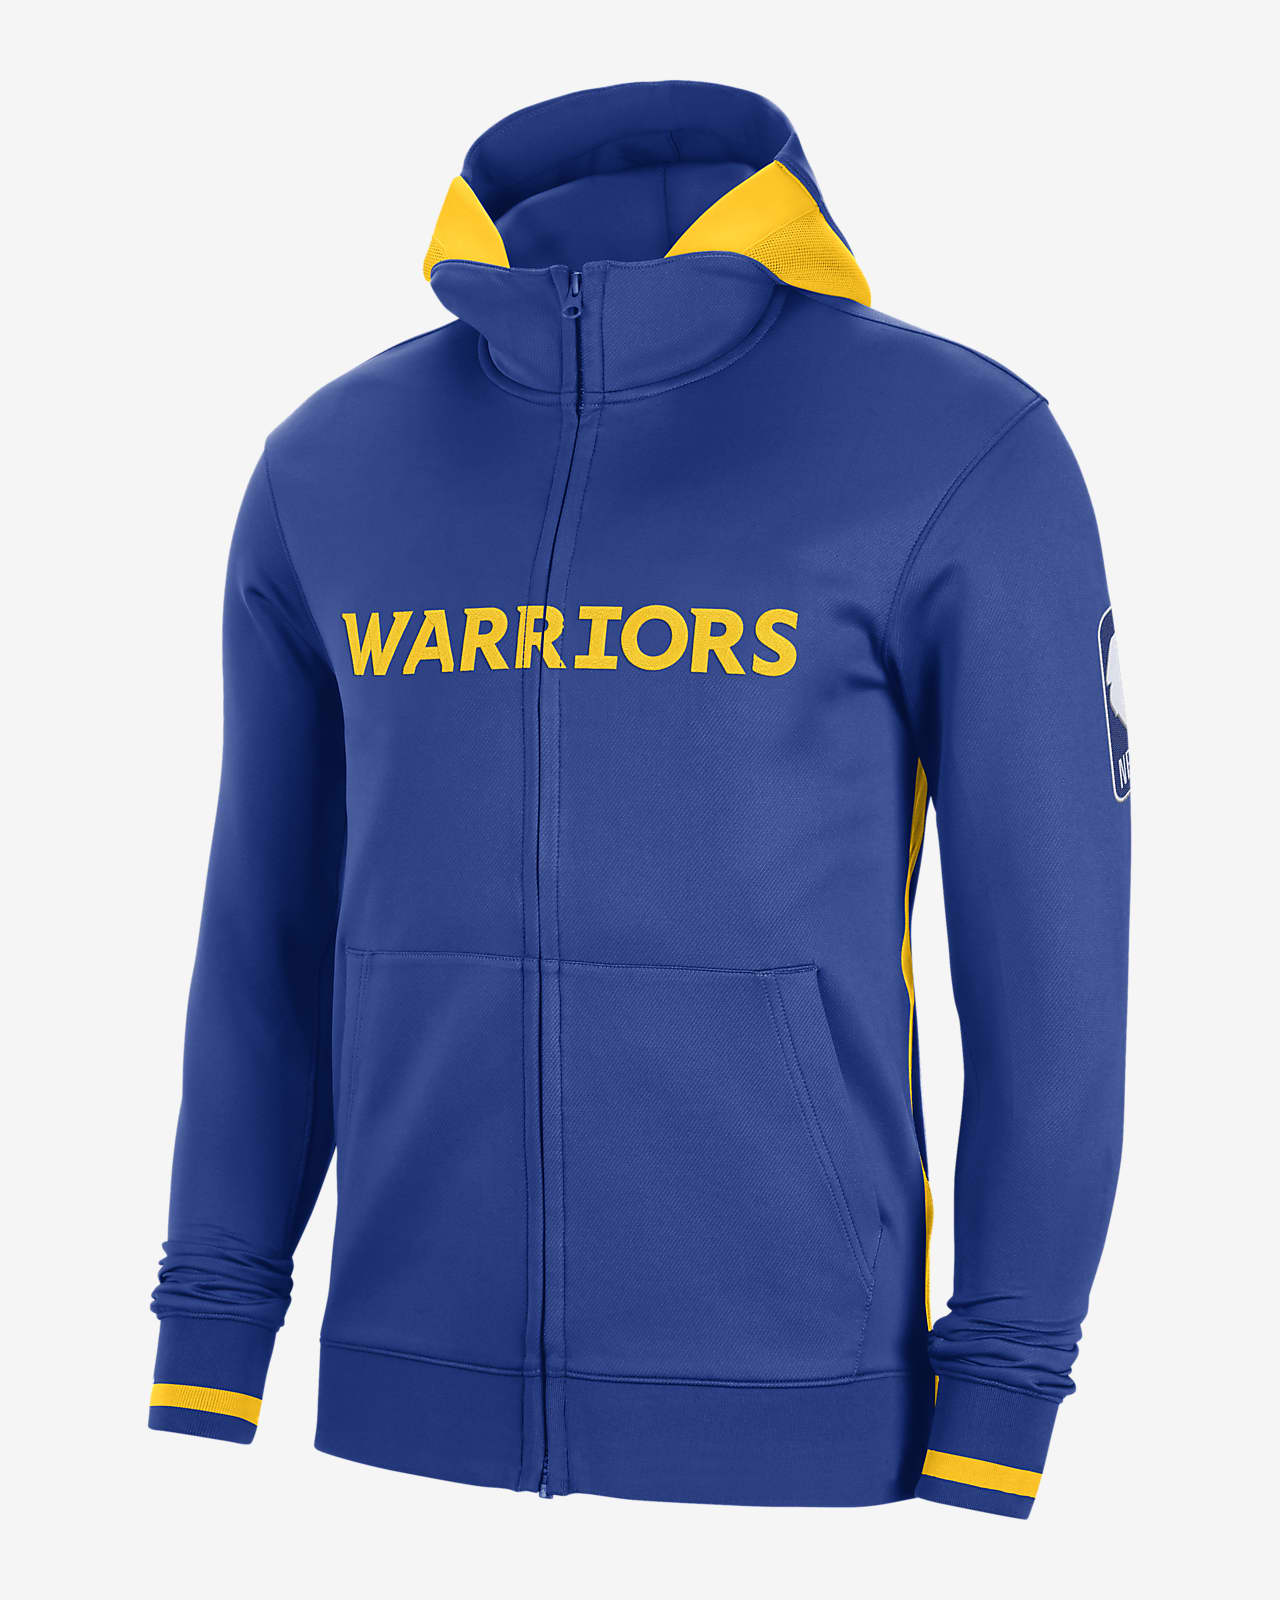 warriors warm up sweatshirt